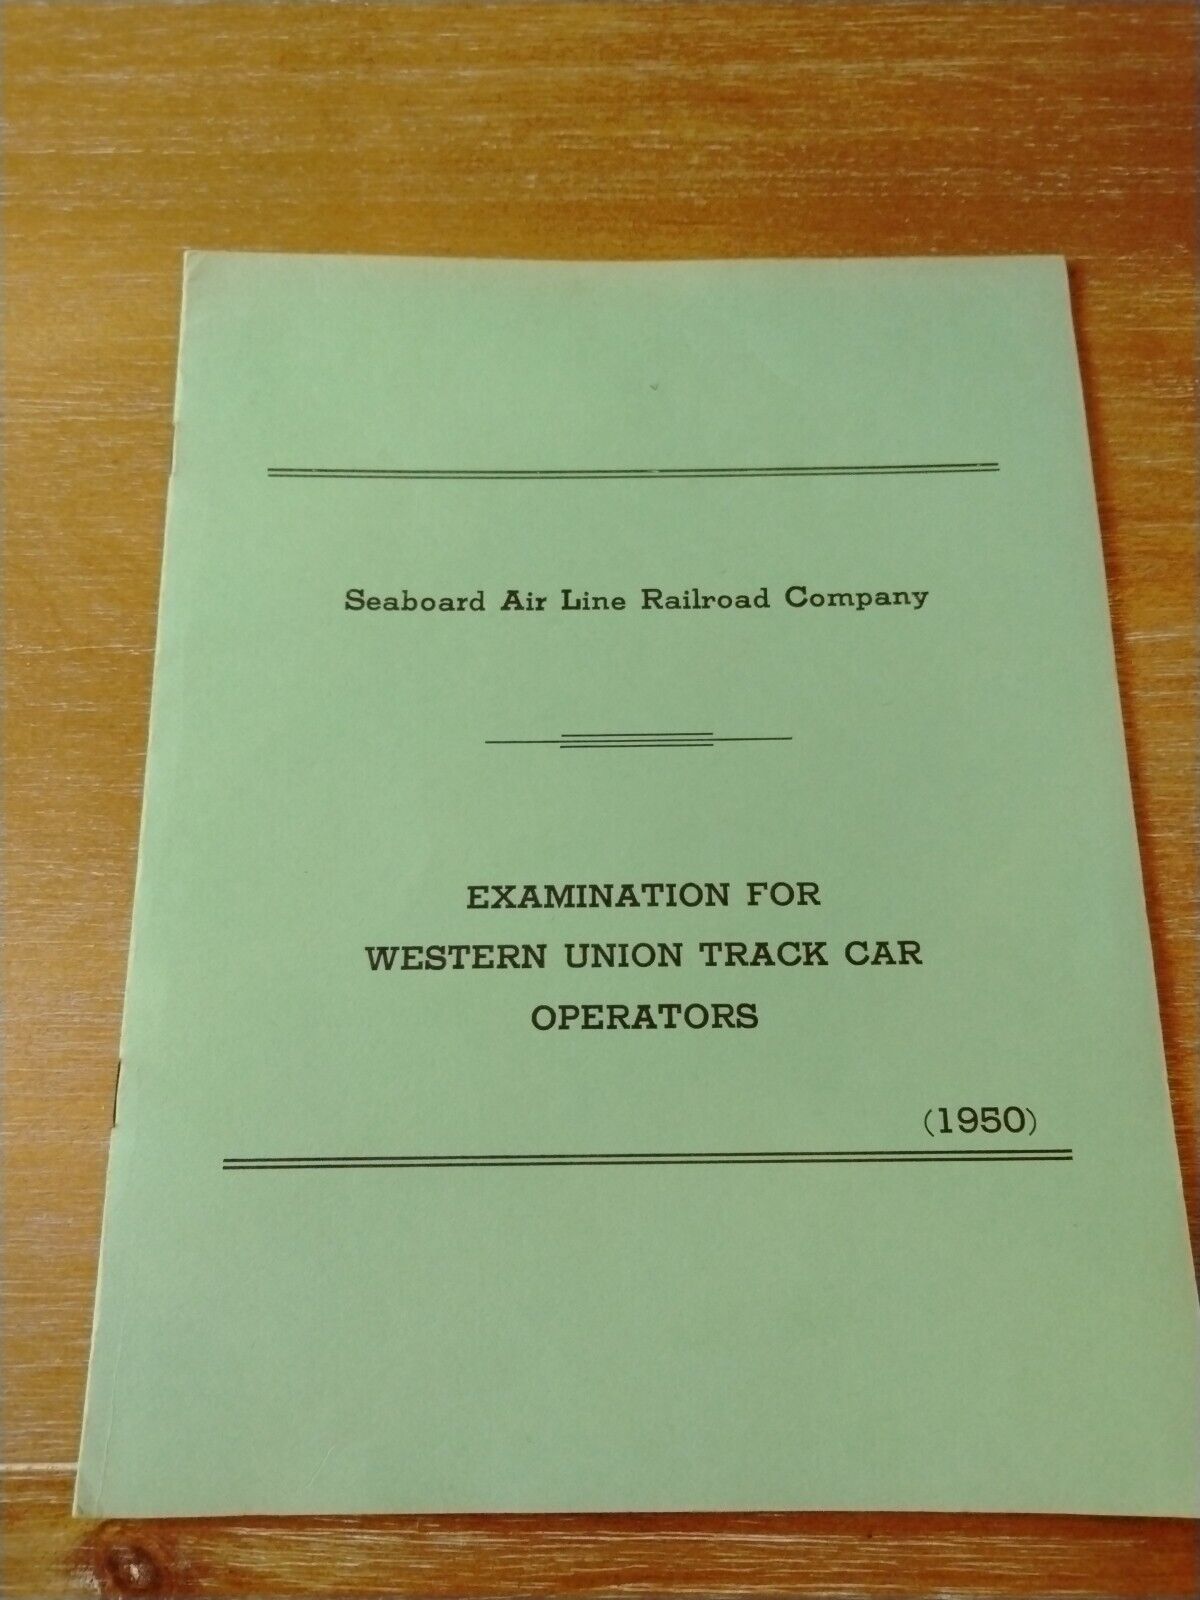 VTG RR~Seaboard Air Line Railroad Exam Western Union Track Car Operators 1950